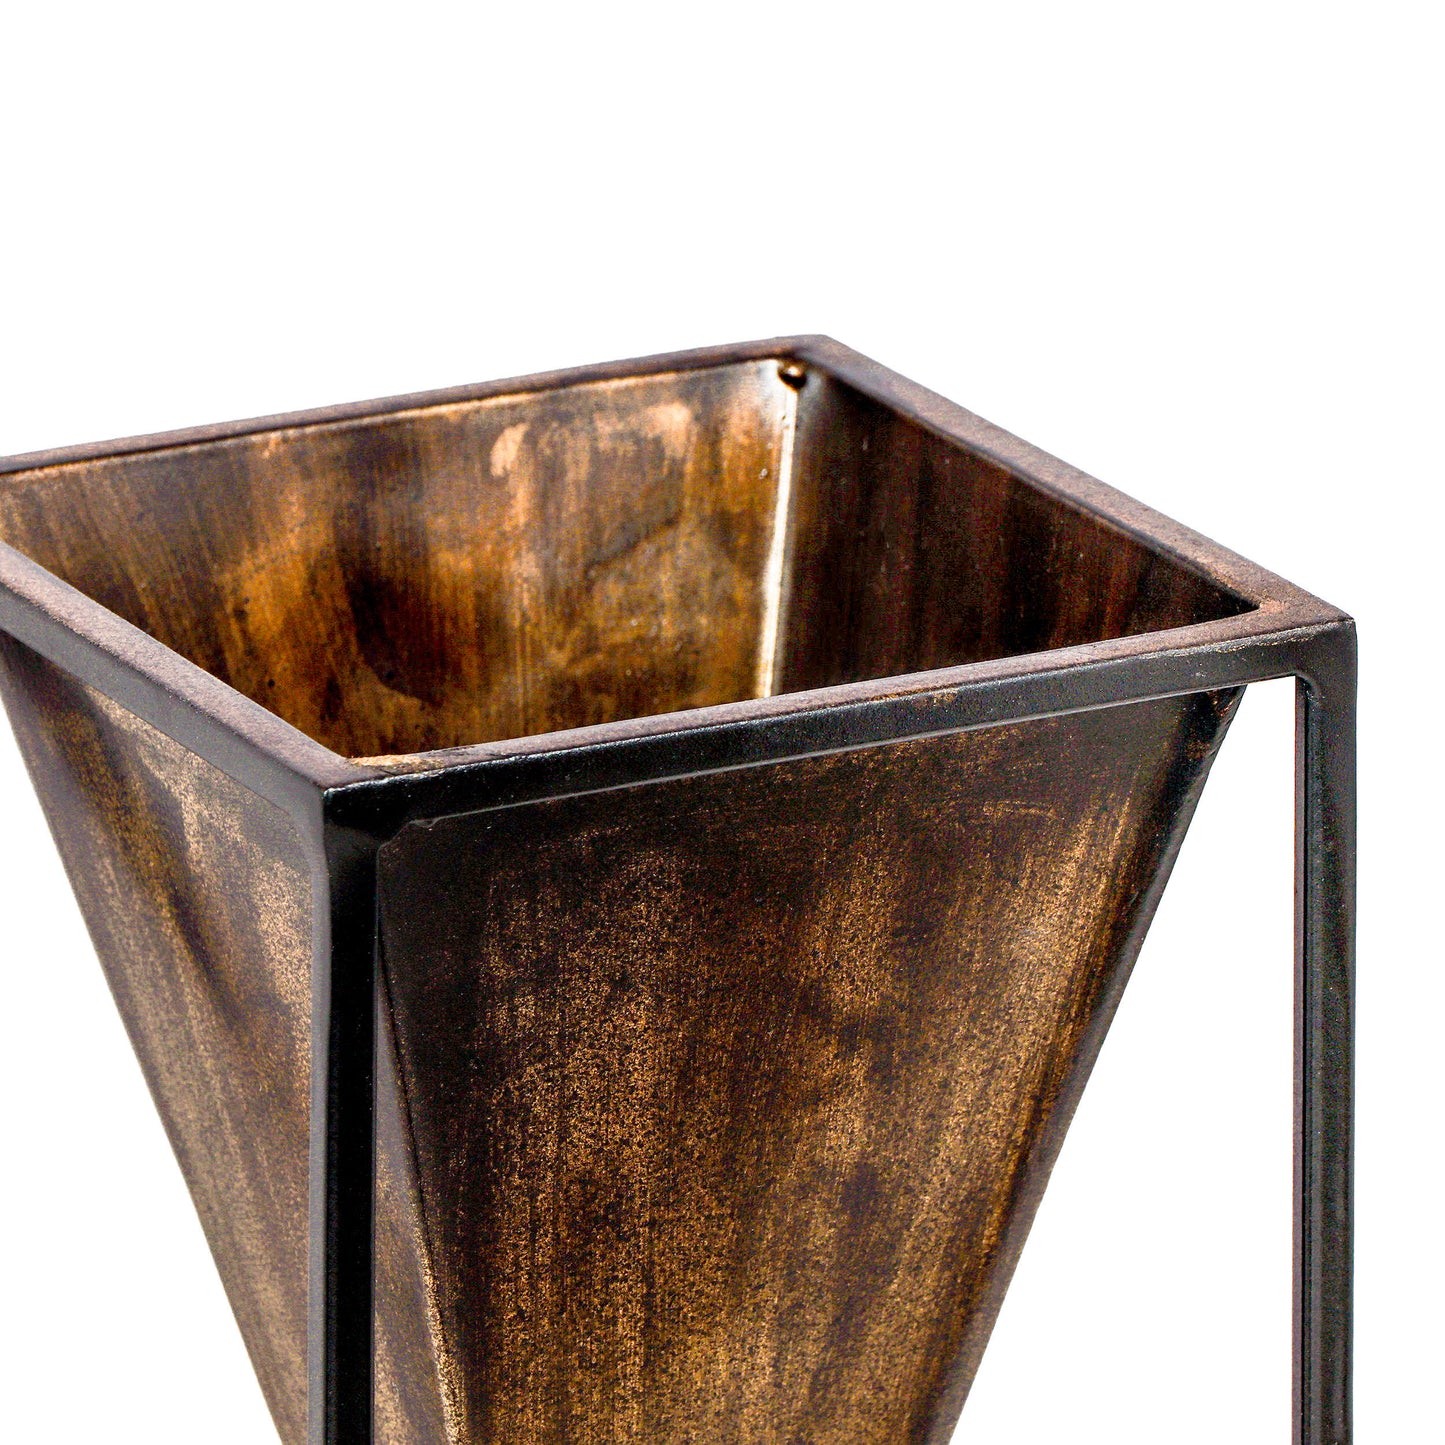 Keyser Handcrafted Iron Decorative Frame Vase